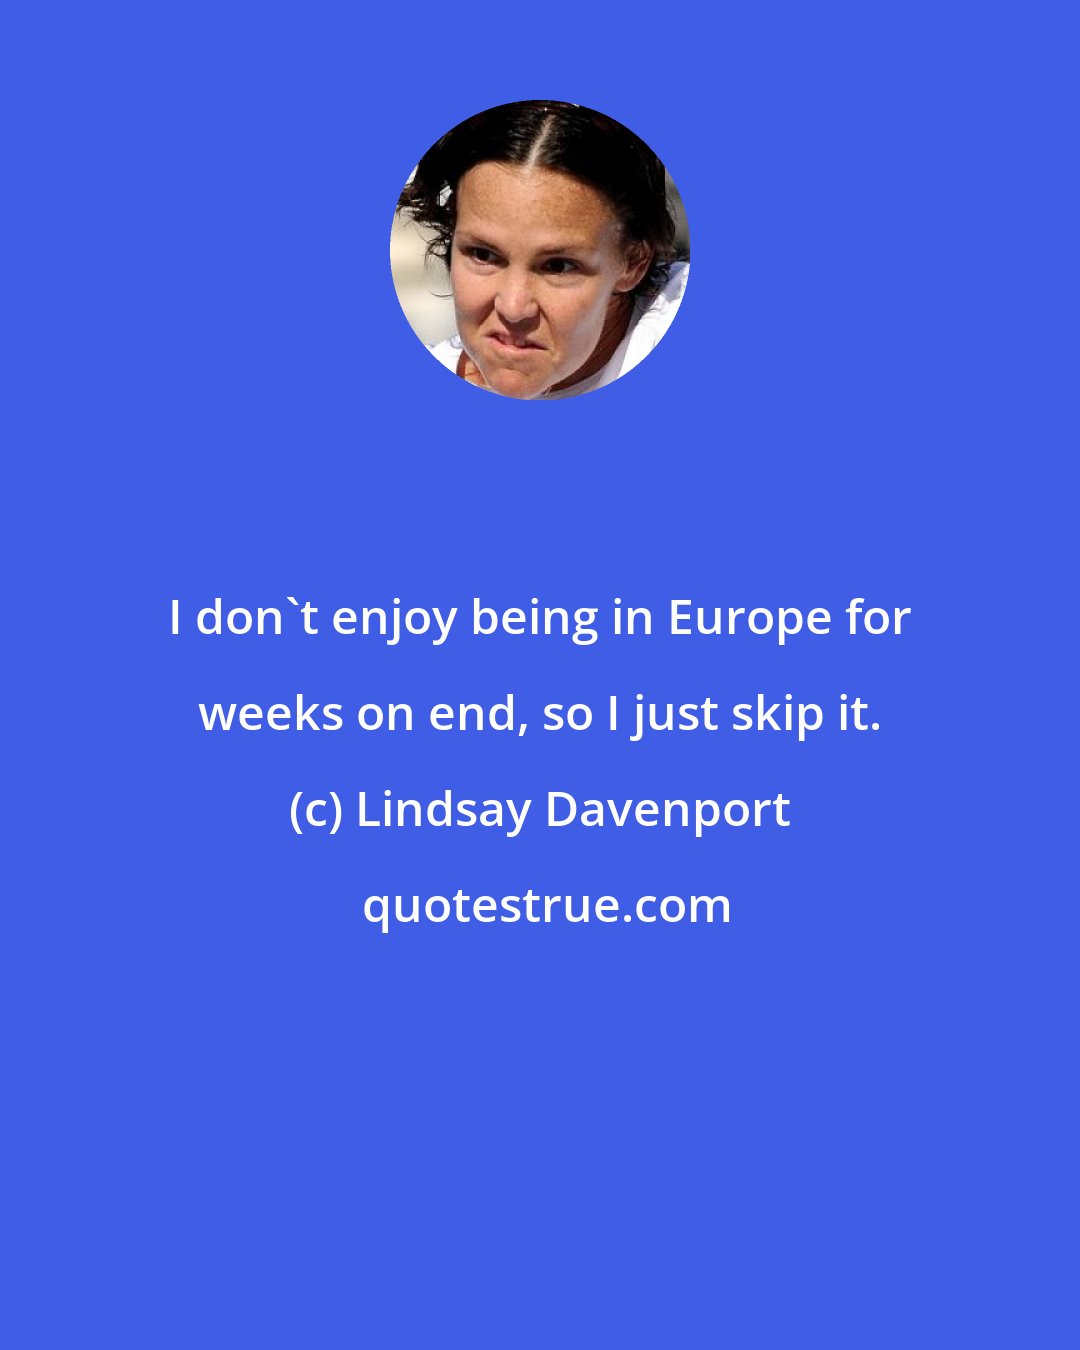 Lindsay Davenport: I don't enjoy being in Europe for weeks on end, so I just skip it.